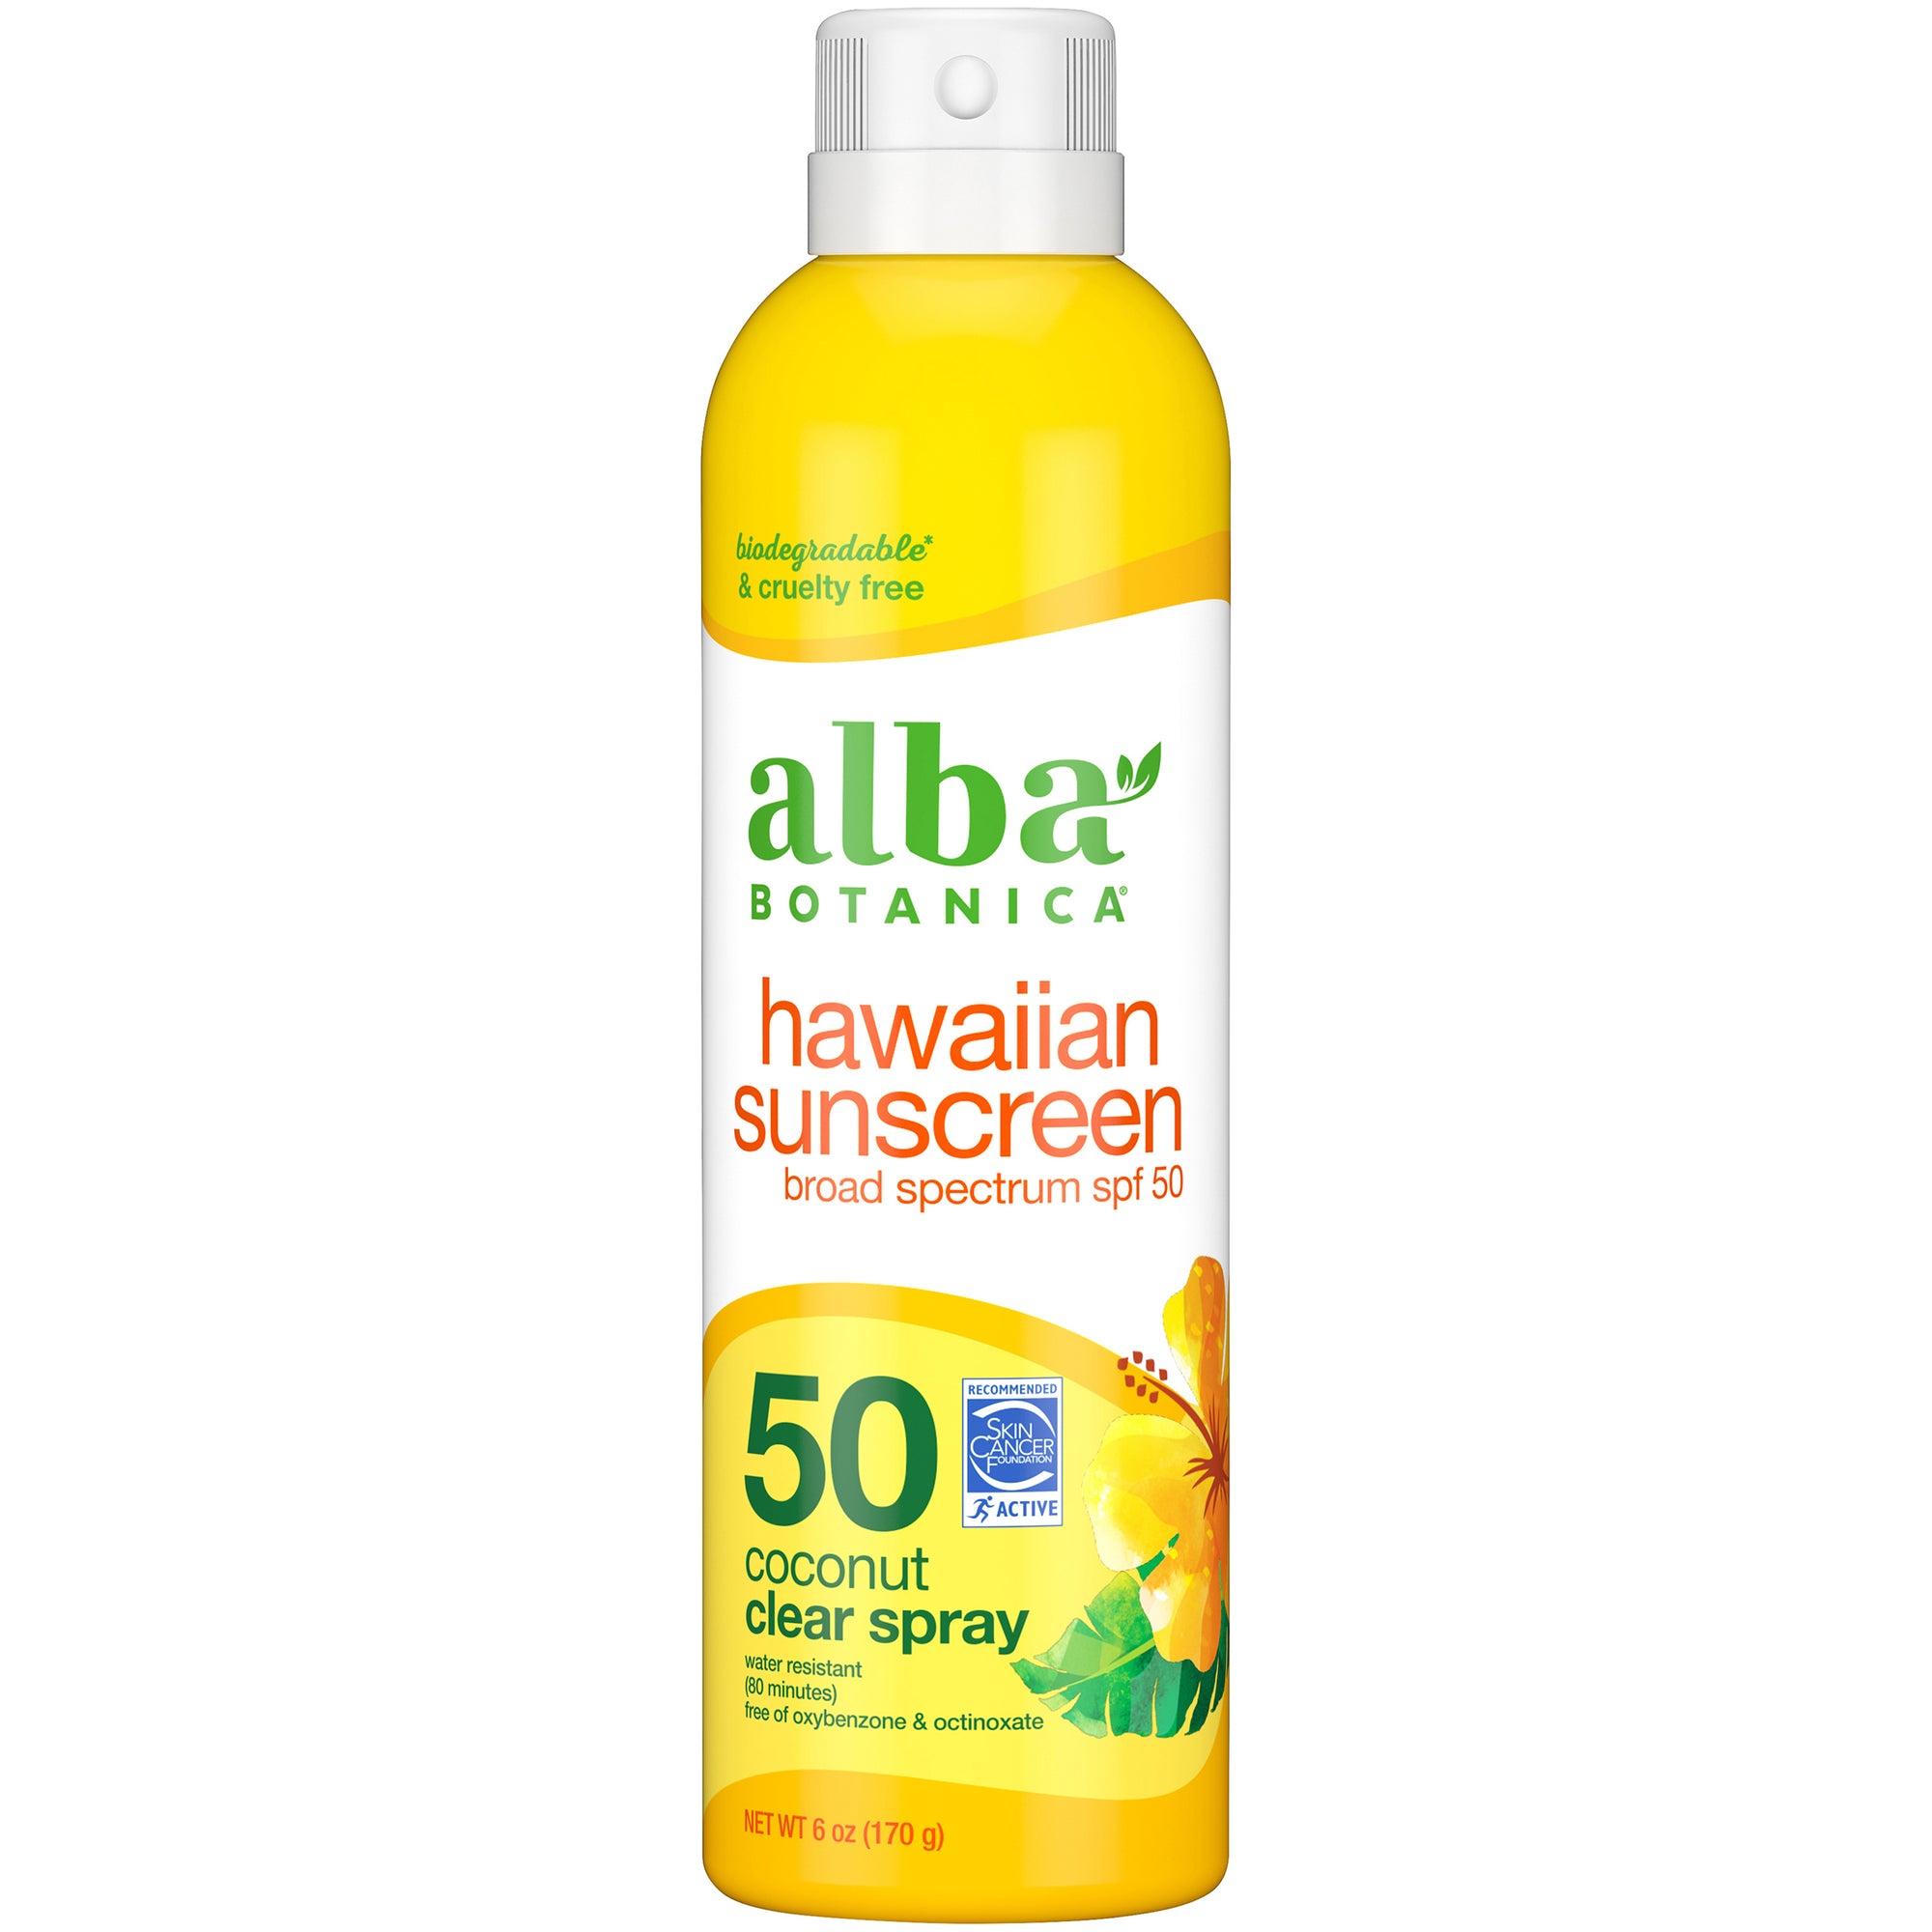 Sunscreen - Clear Spray Spf 50 - 6 Oz / 171g